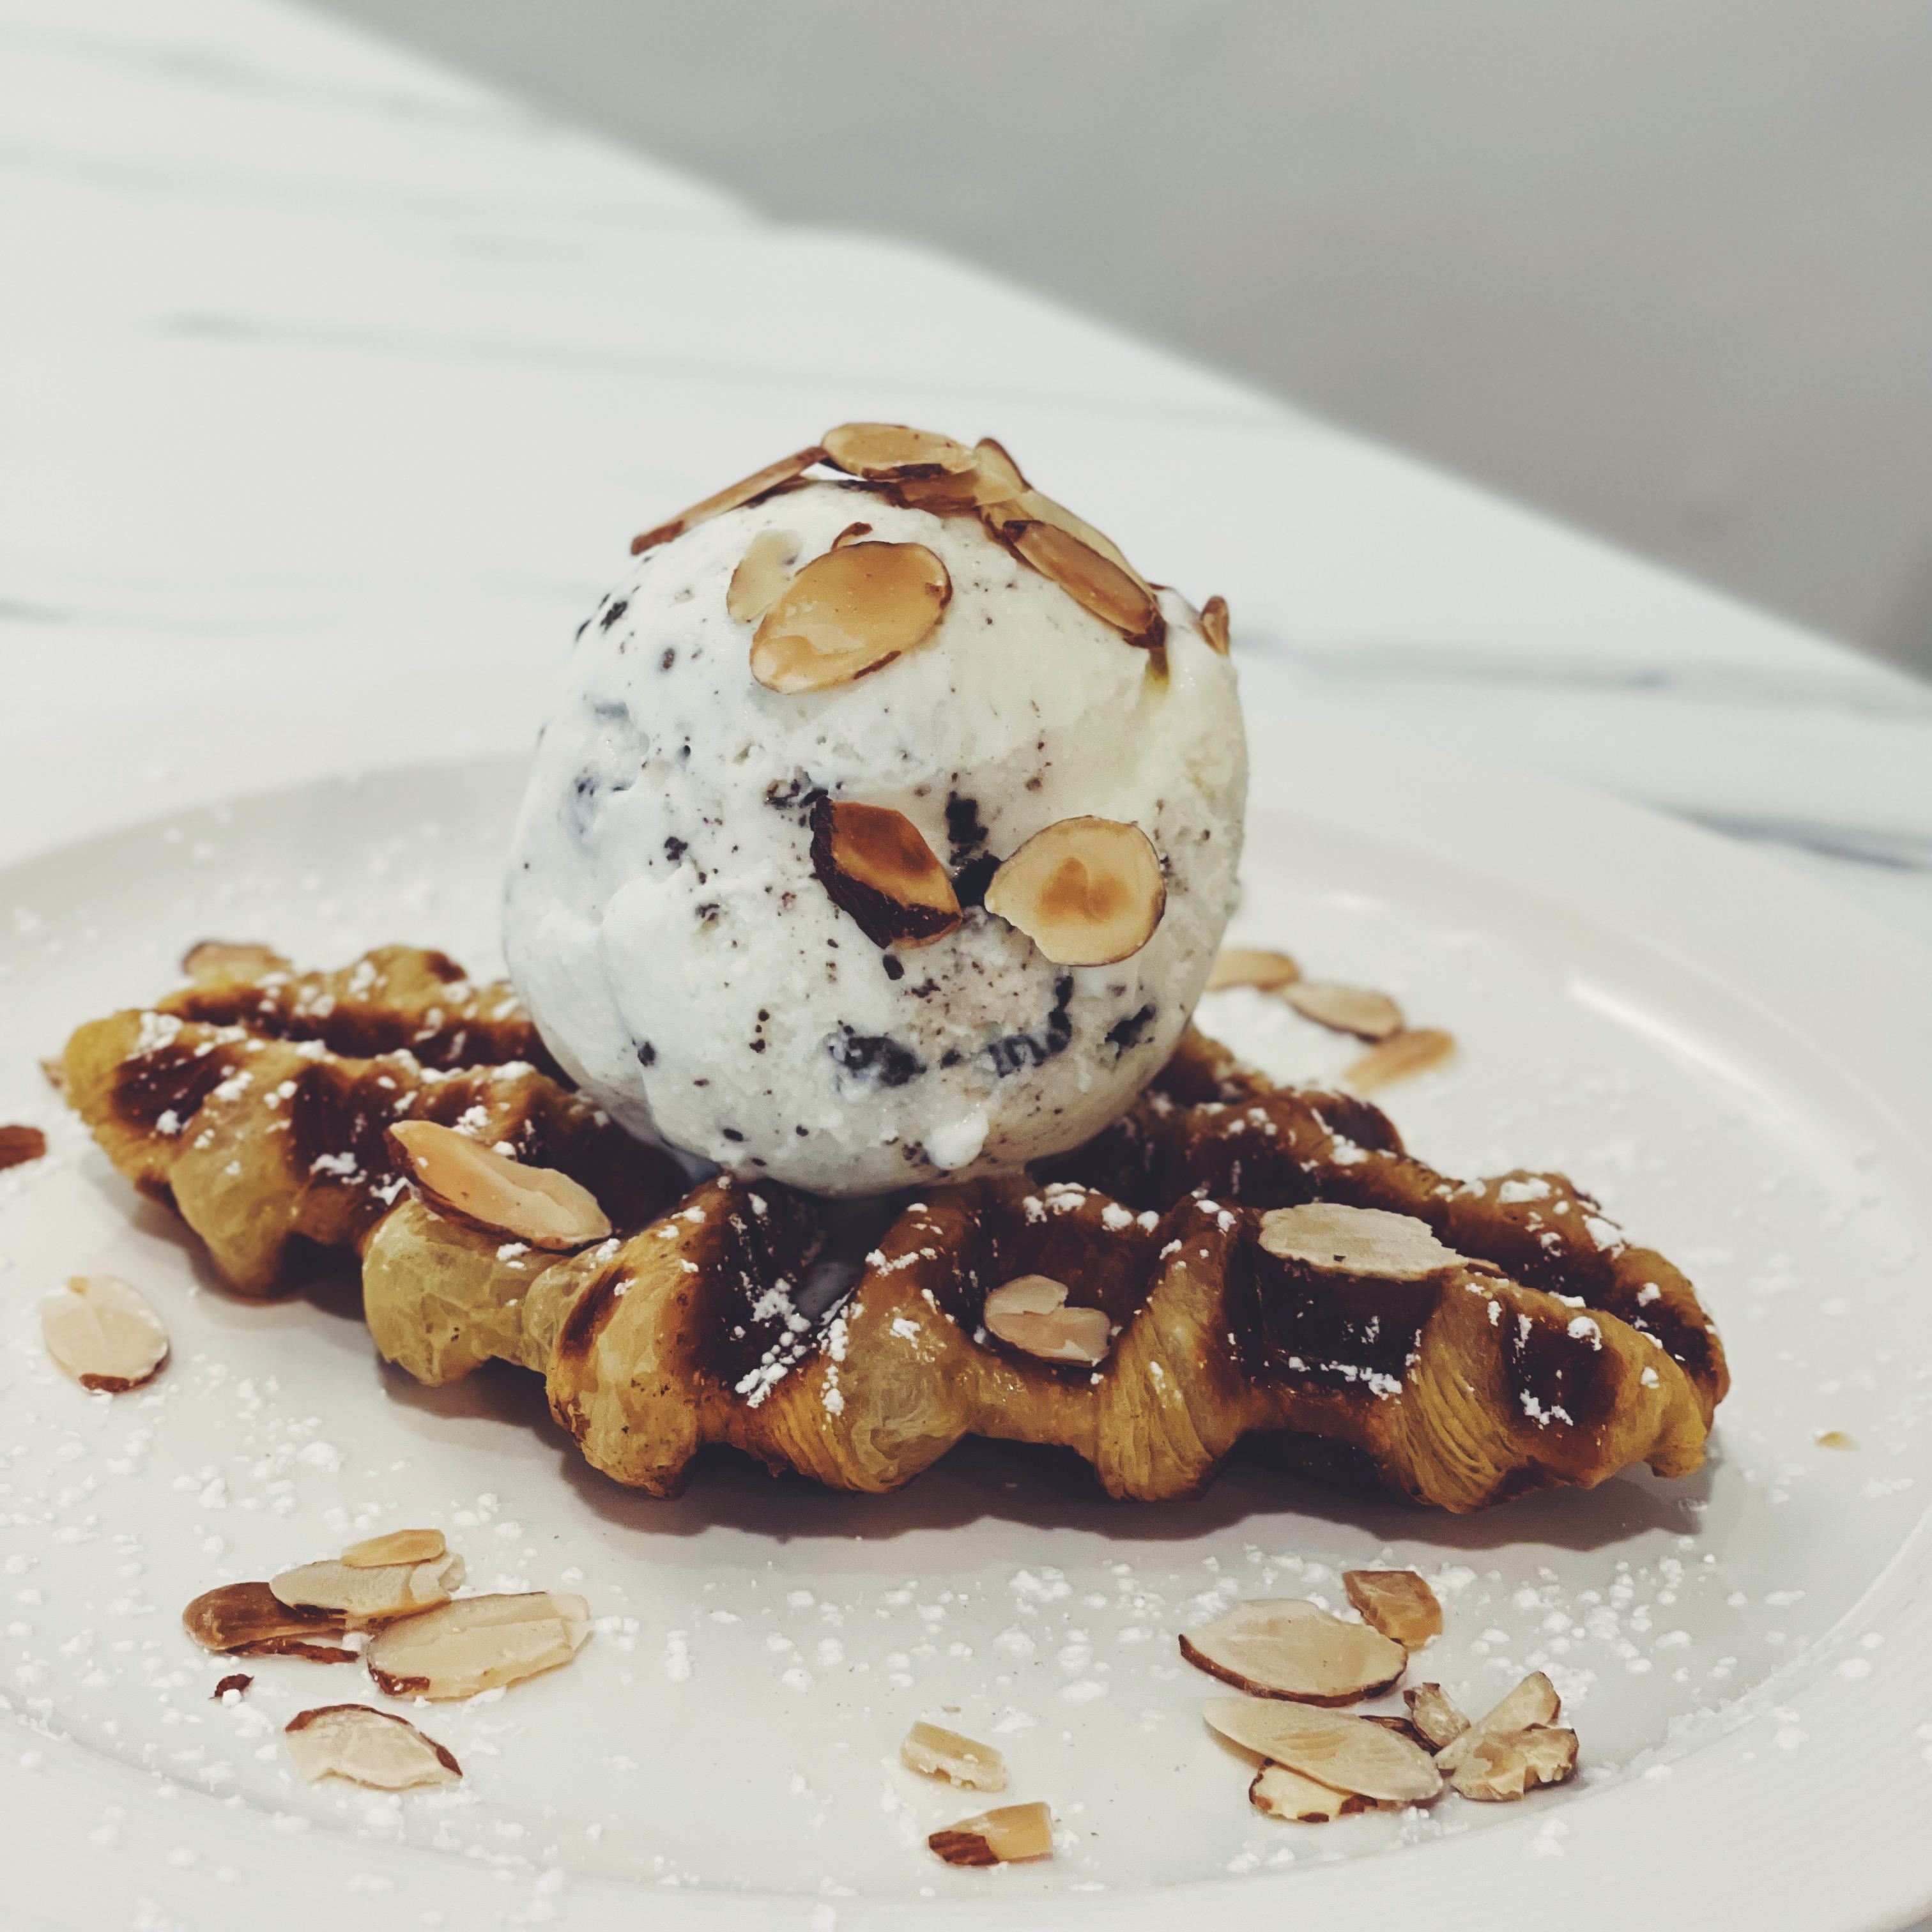 1 x Croffle + 1 x Single Scoop Ice Cream at Desert Dessert - Get Deals, Cashback and Rewards with ShopBack GO